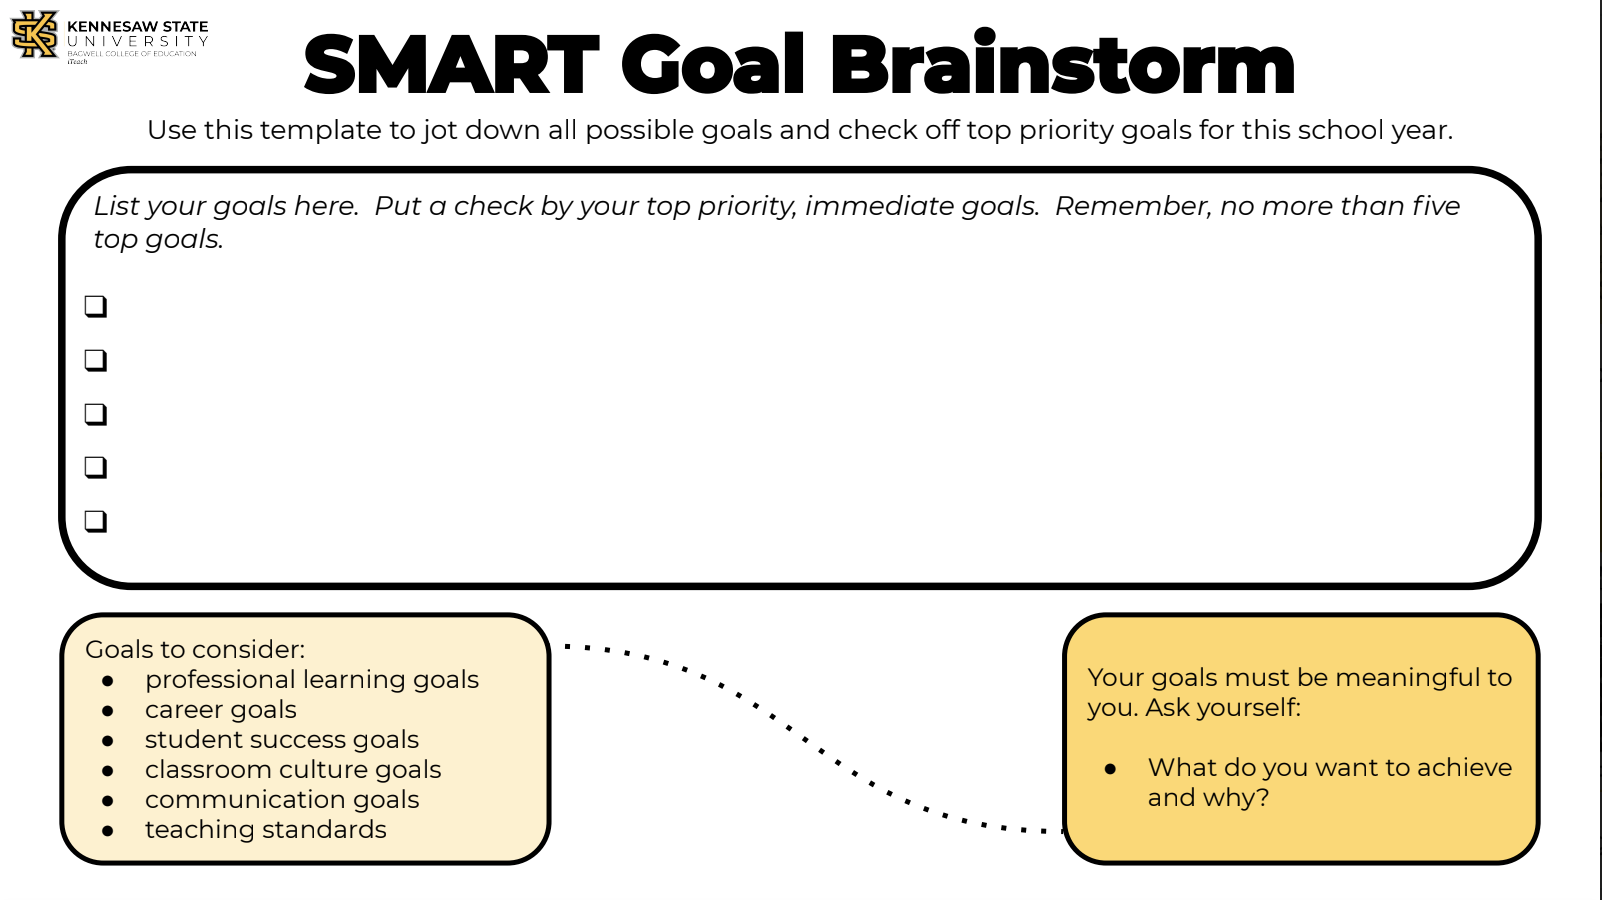 Setting Smart Goals Template.png